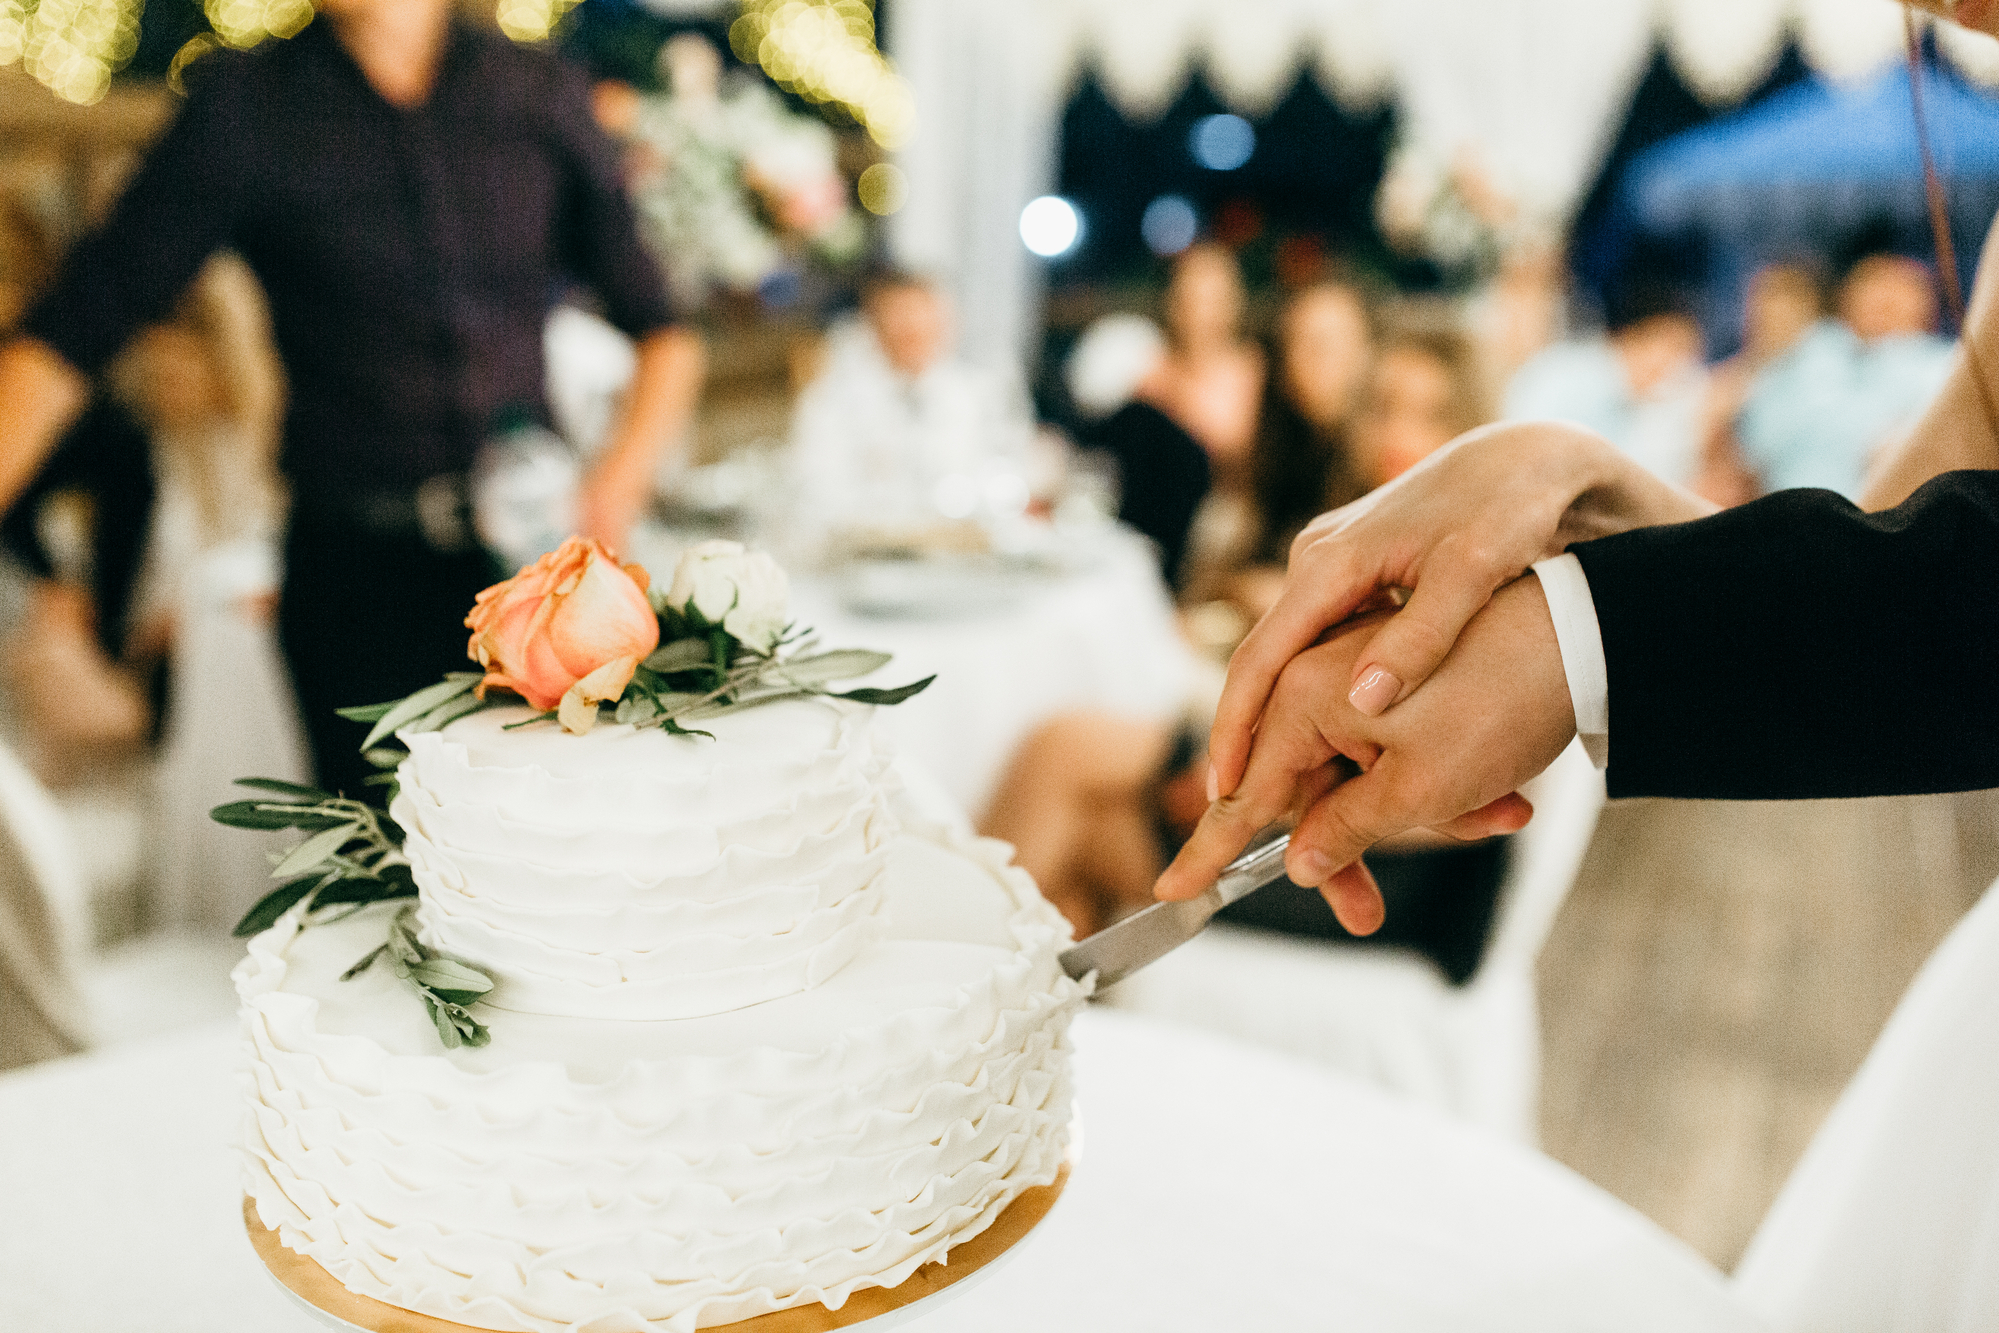 Couple cutting beautiful wedding cake - stock photo